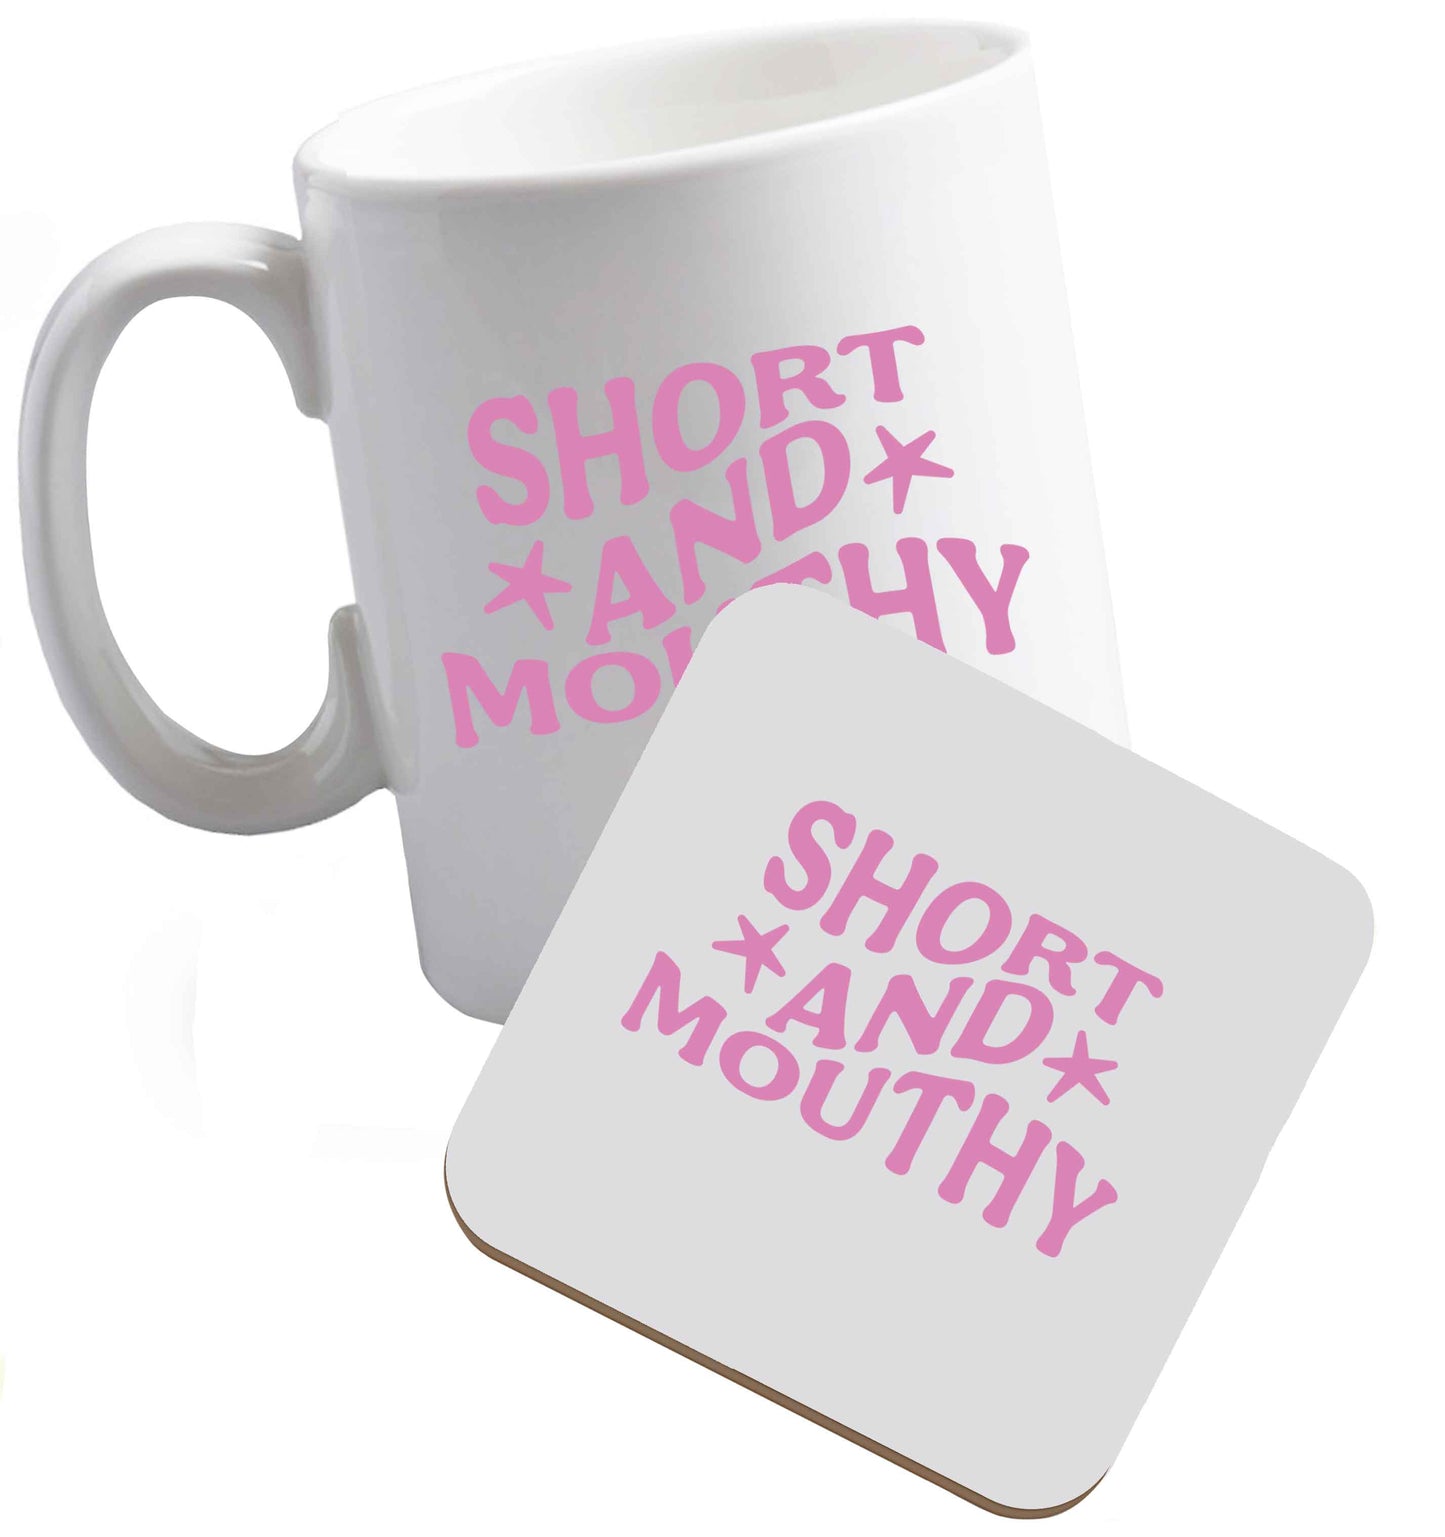 10 ozShort and Mouthy ceramic mug and coaster set right handed